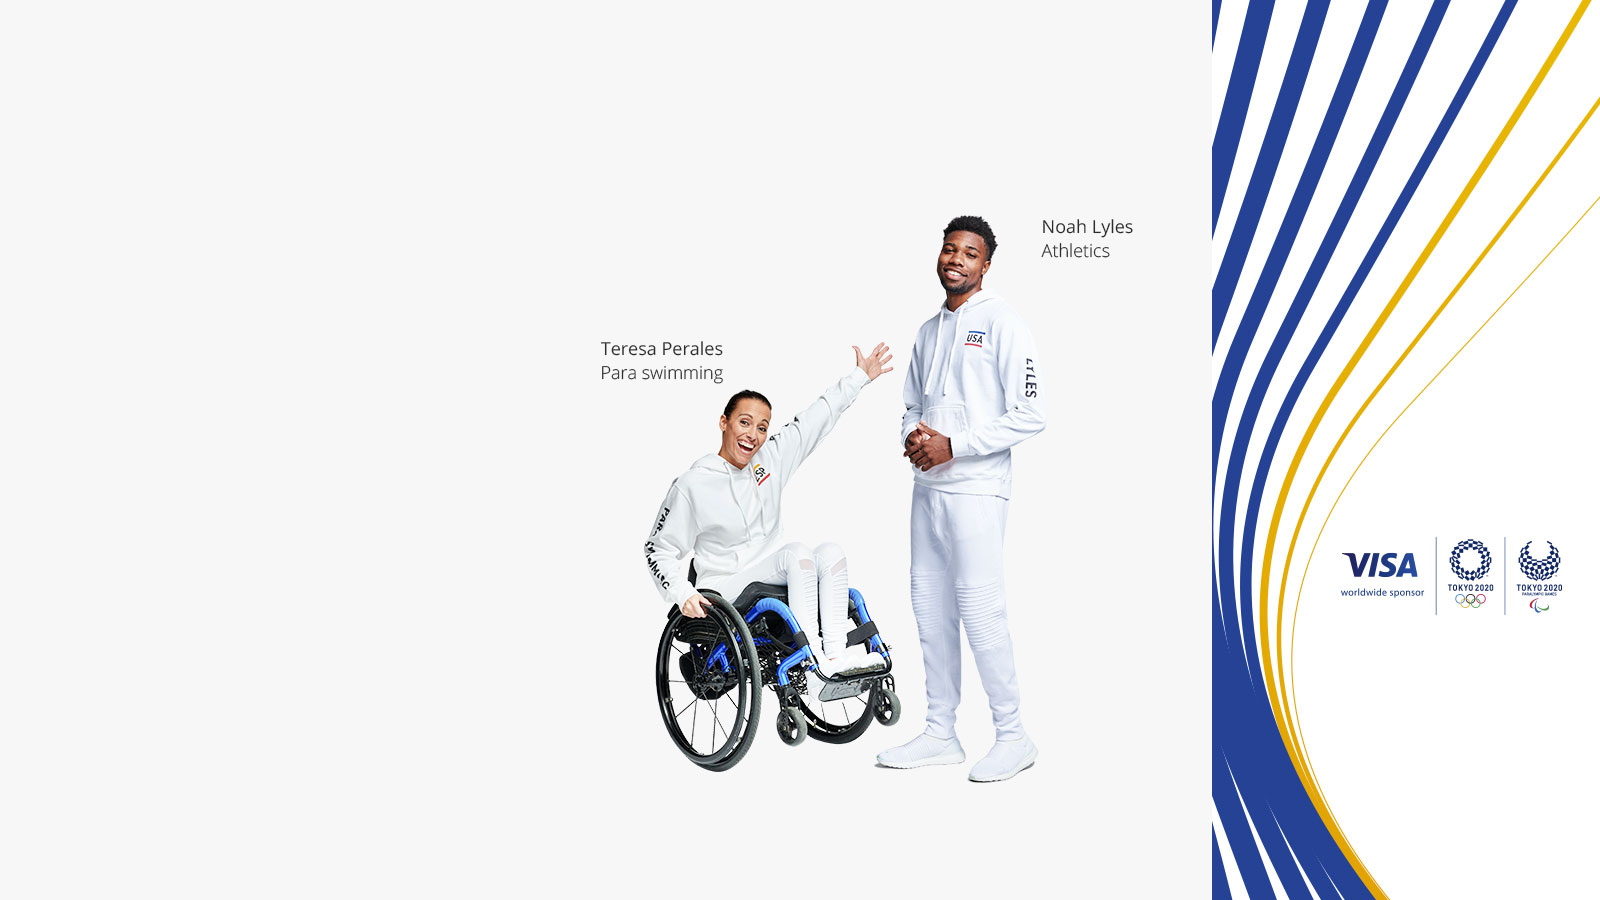 Paralympian Swimmer Teresa Perales and Olympian Athlete Noah Lyles next to the Visa logo, and the Tokyo 2020 Olympics and Paralympics logos.